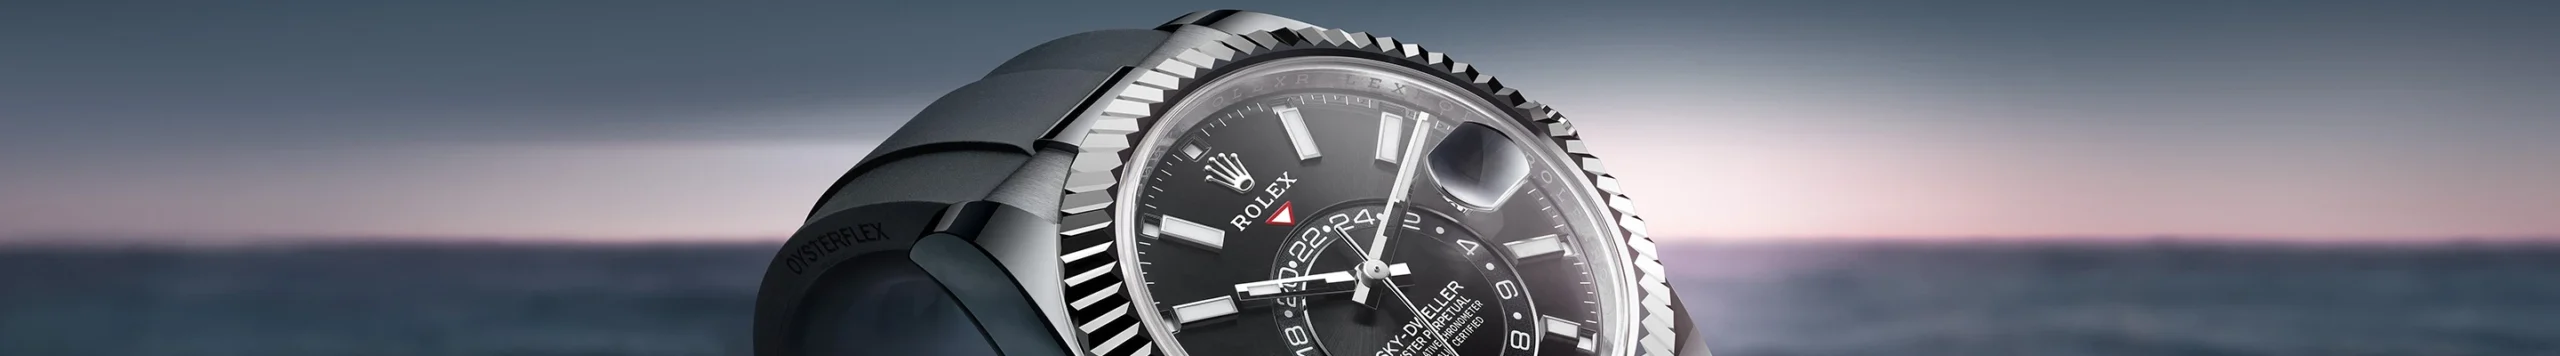 Rolex Sky-Dweller - NGG Timepieces | Rolex Official Retailer